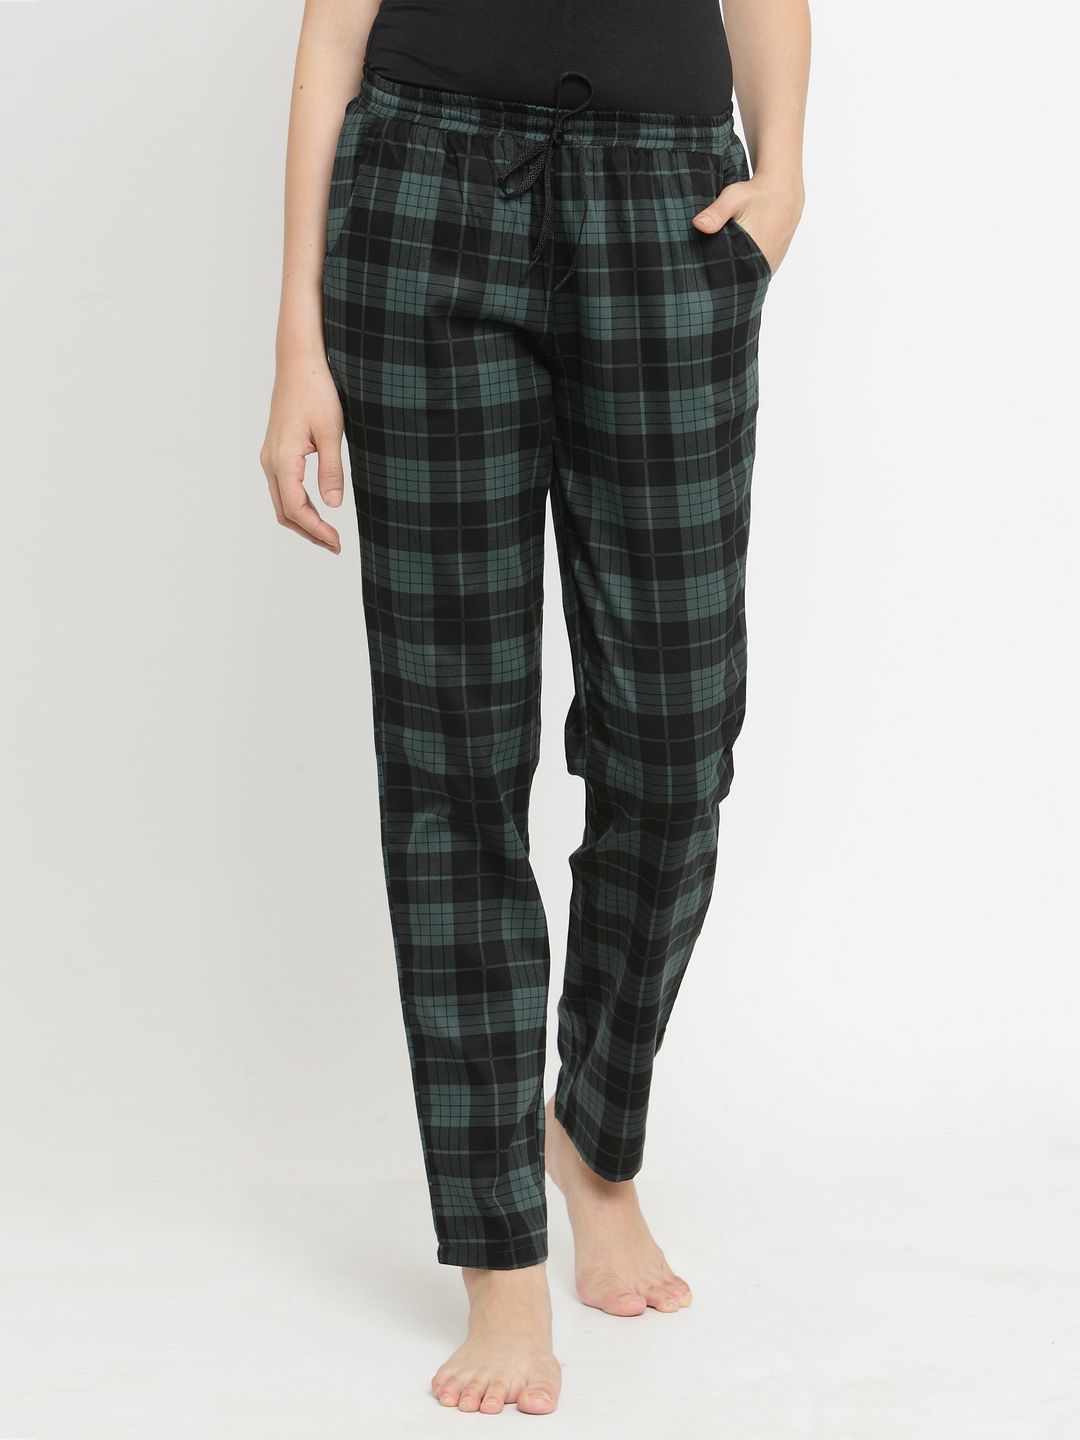 Claura Women Green & Black Checked Regular Fit Pyjama Lower-12 Price in India